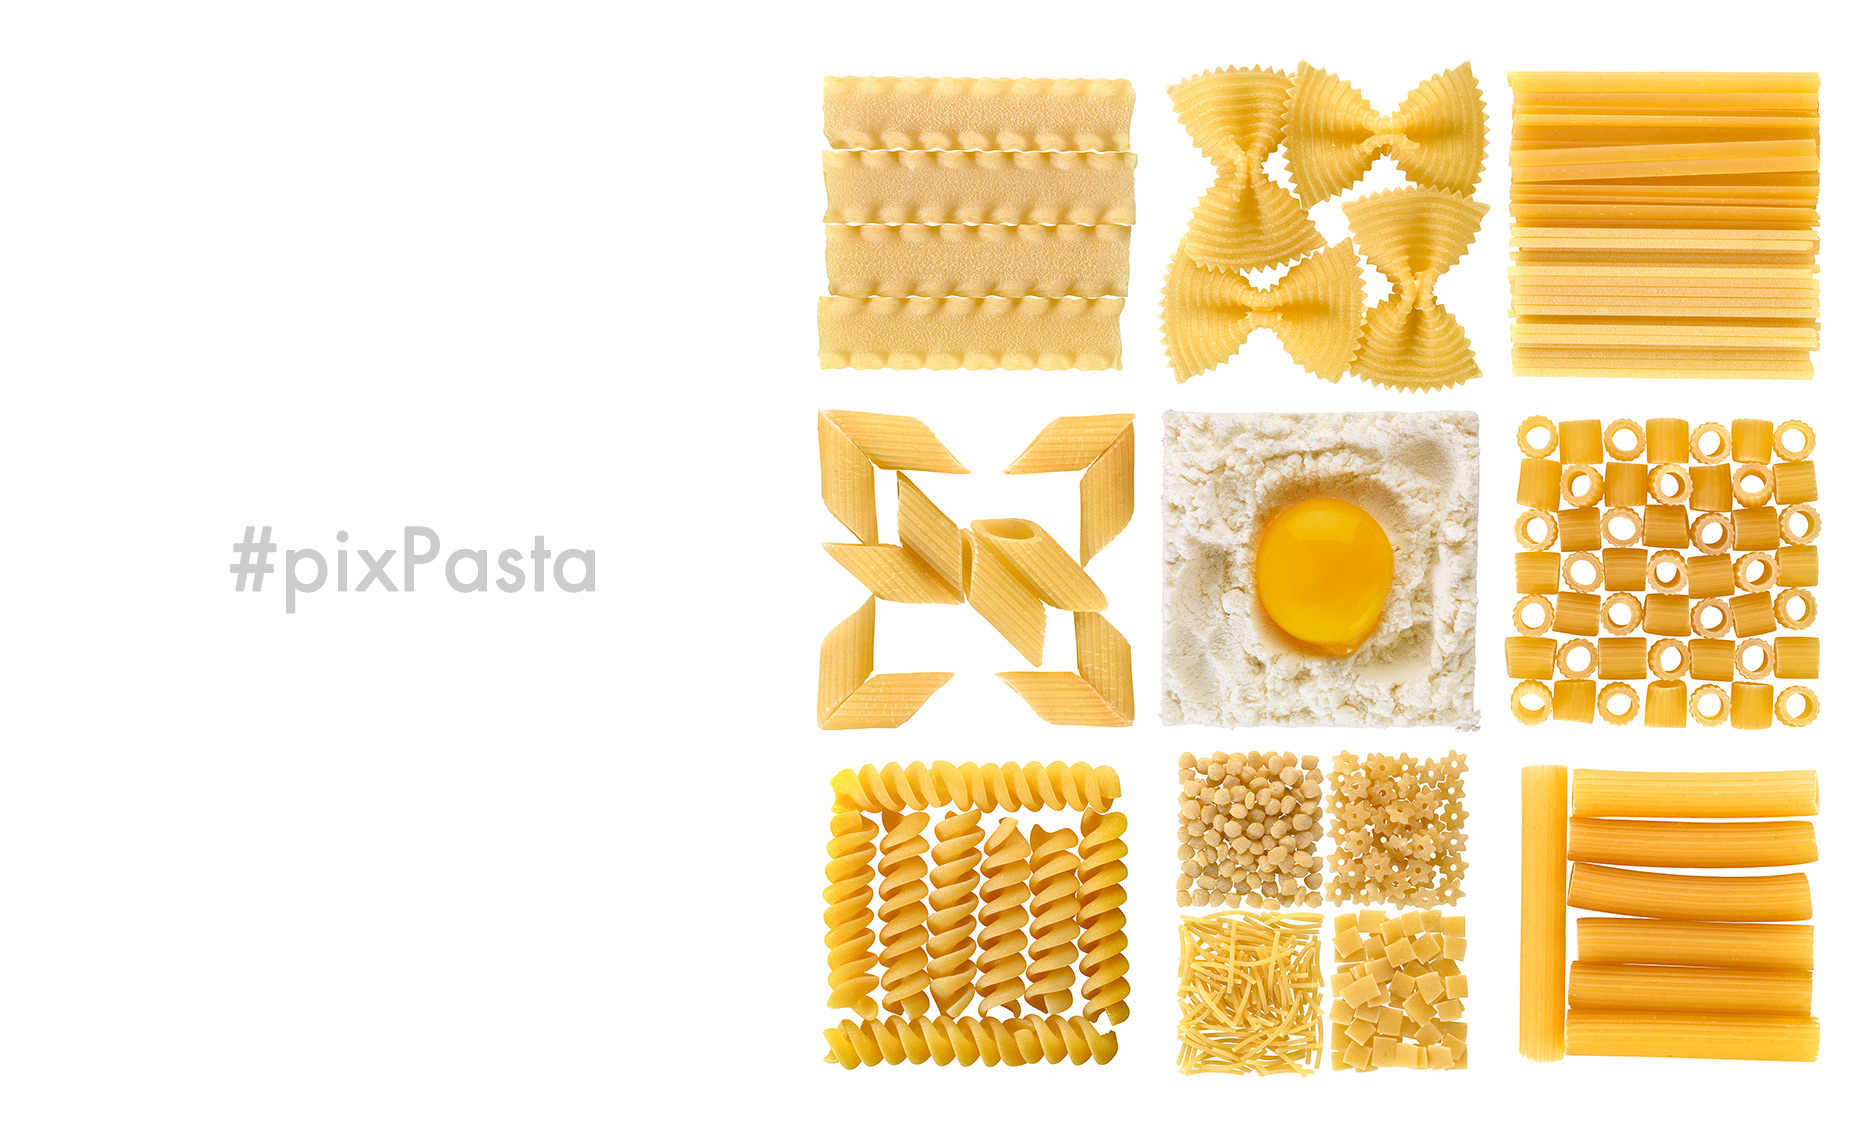 PIXFOOD_Pasta